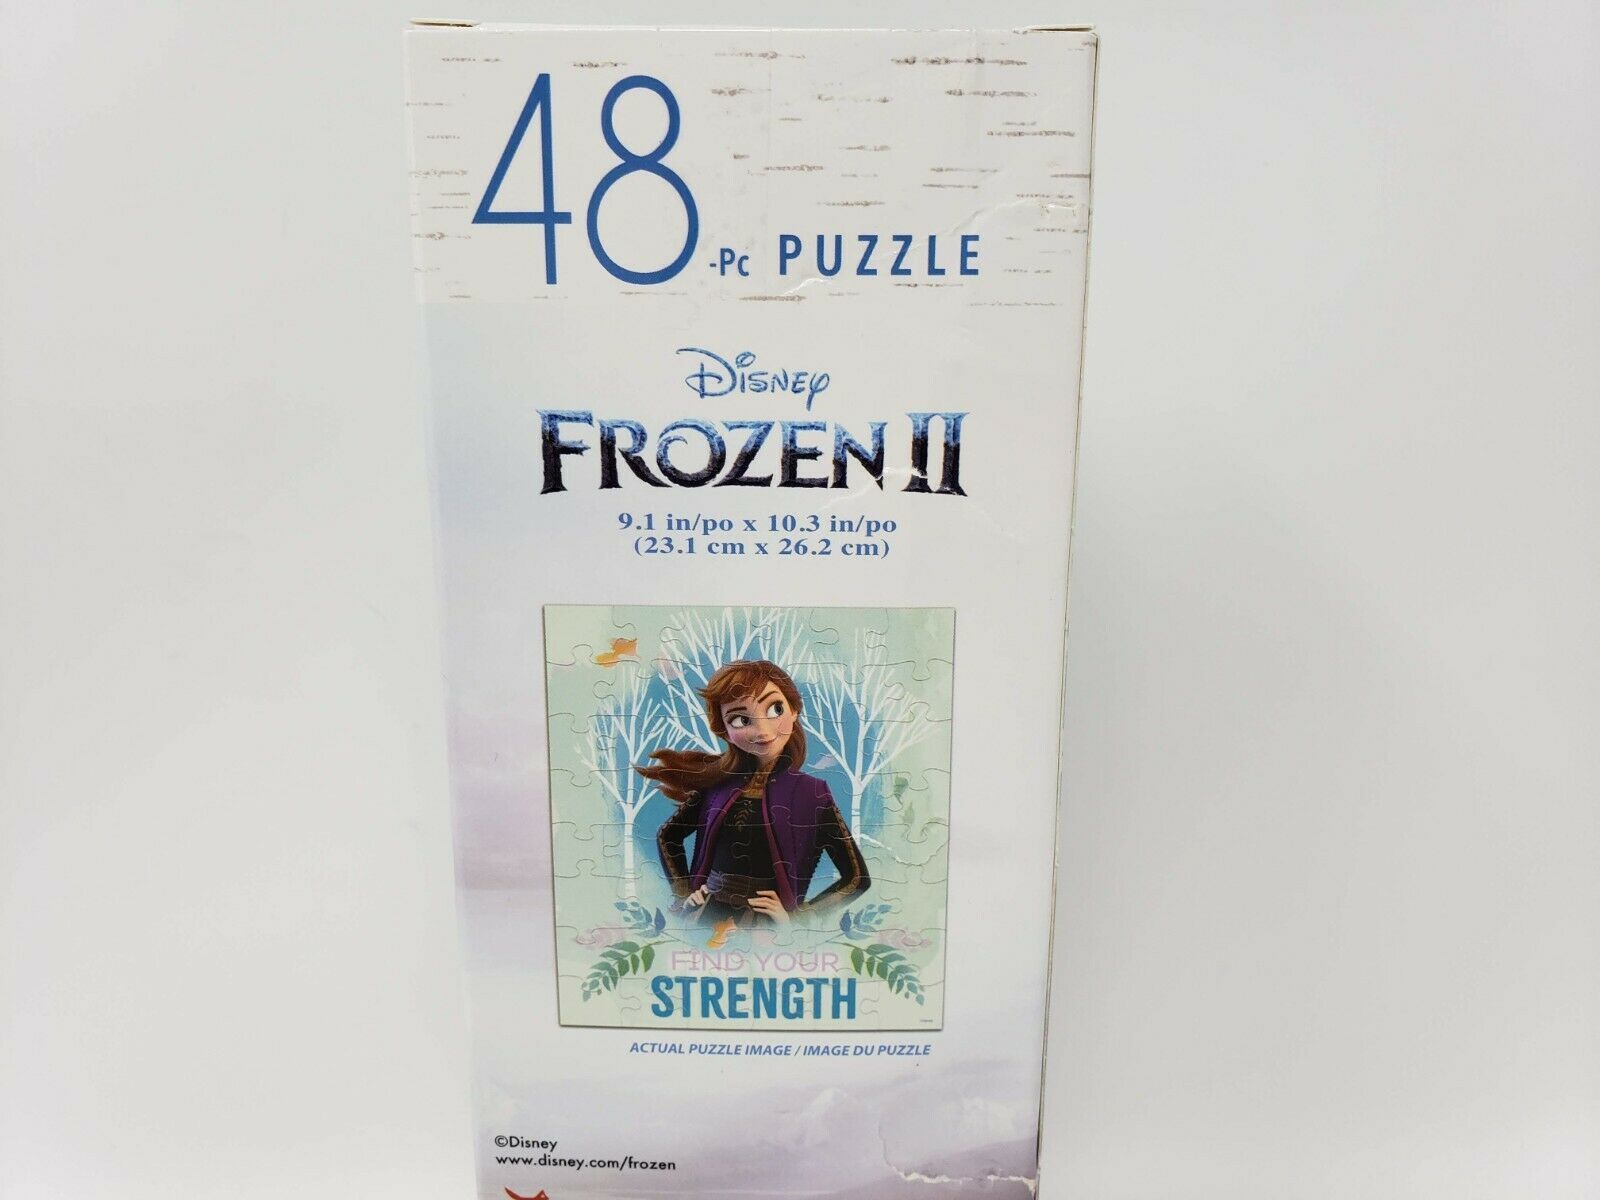 Disney Frozen II 48 Pc Jigsaw Puzzle - New - Anna Strength